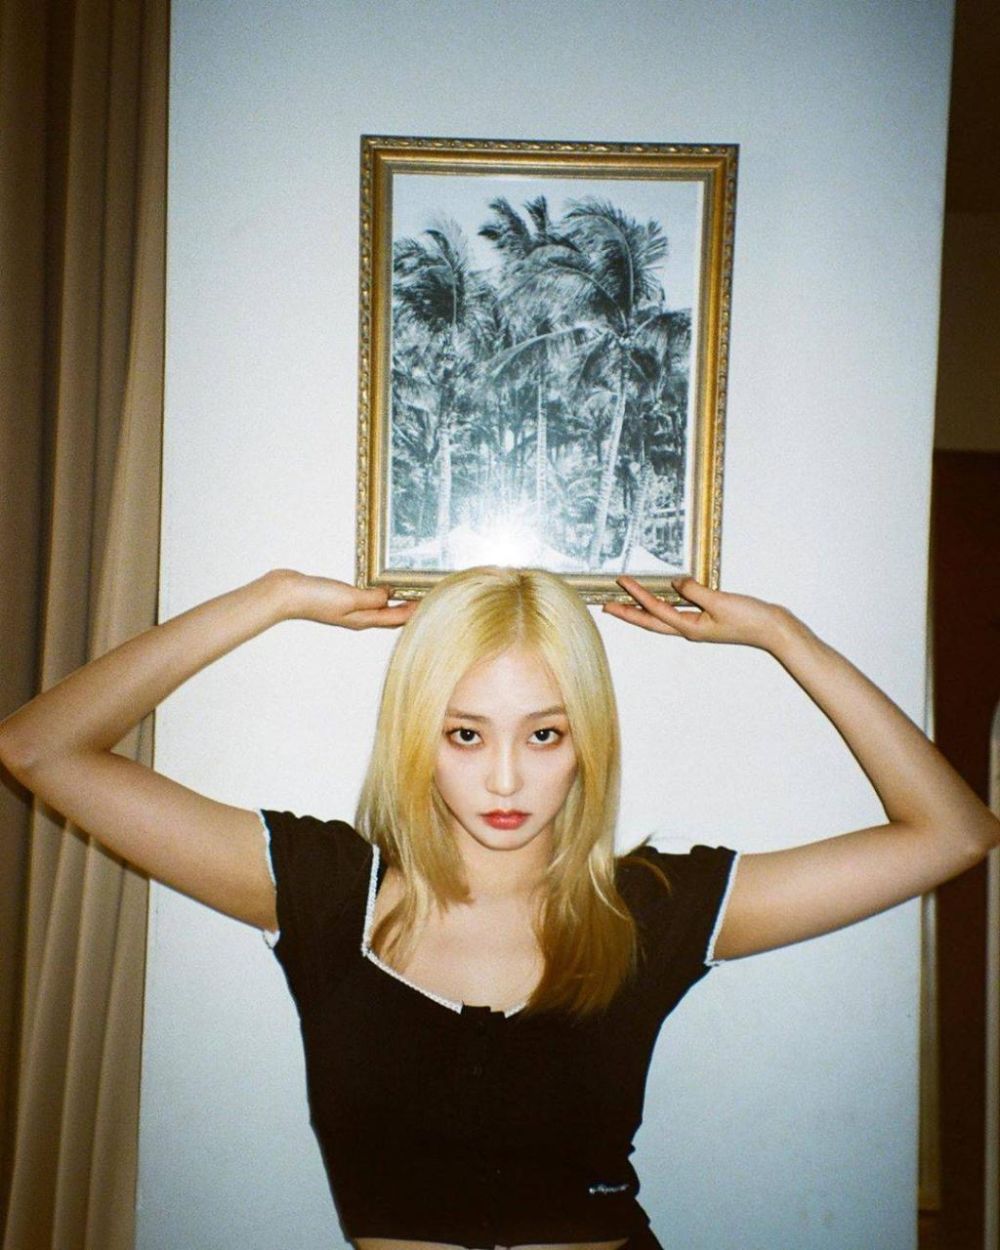 Yeeun Sexy and Hottest Photos , Latest Pics